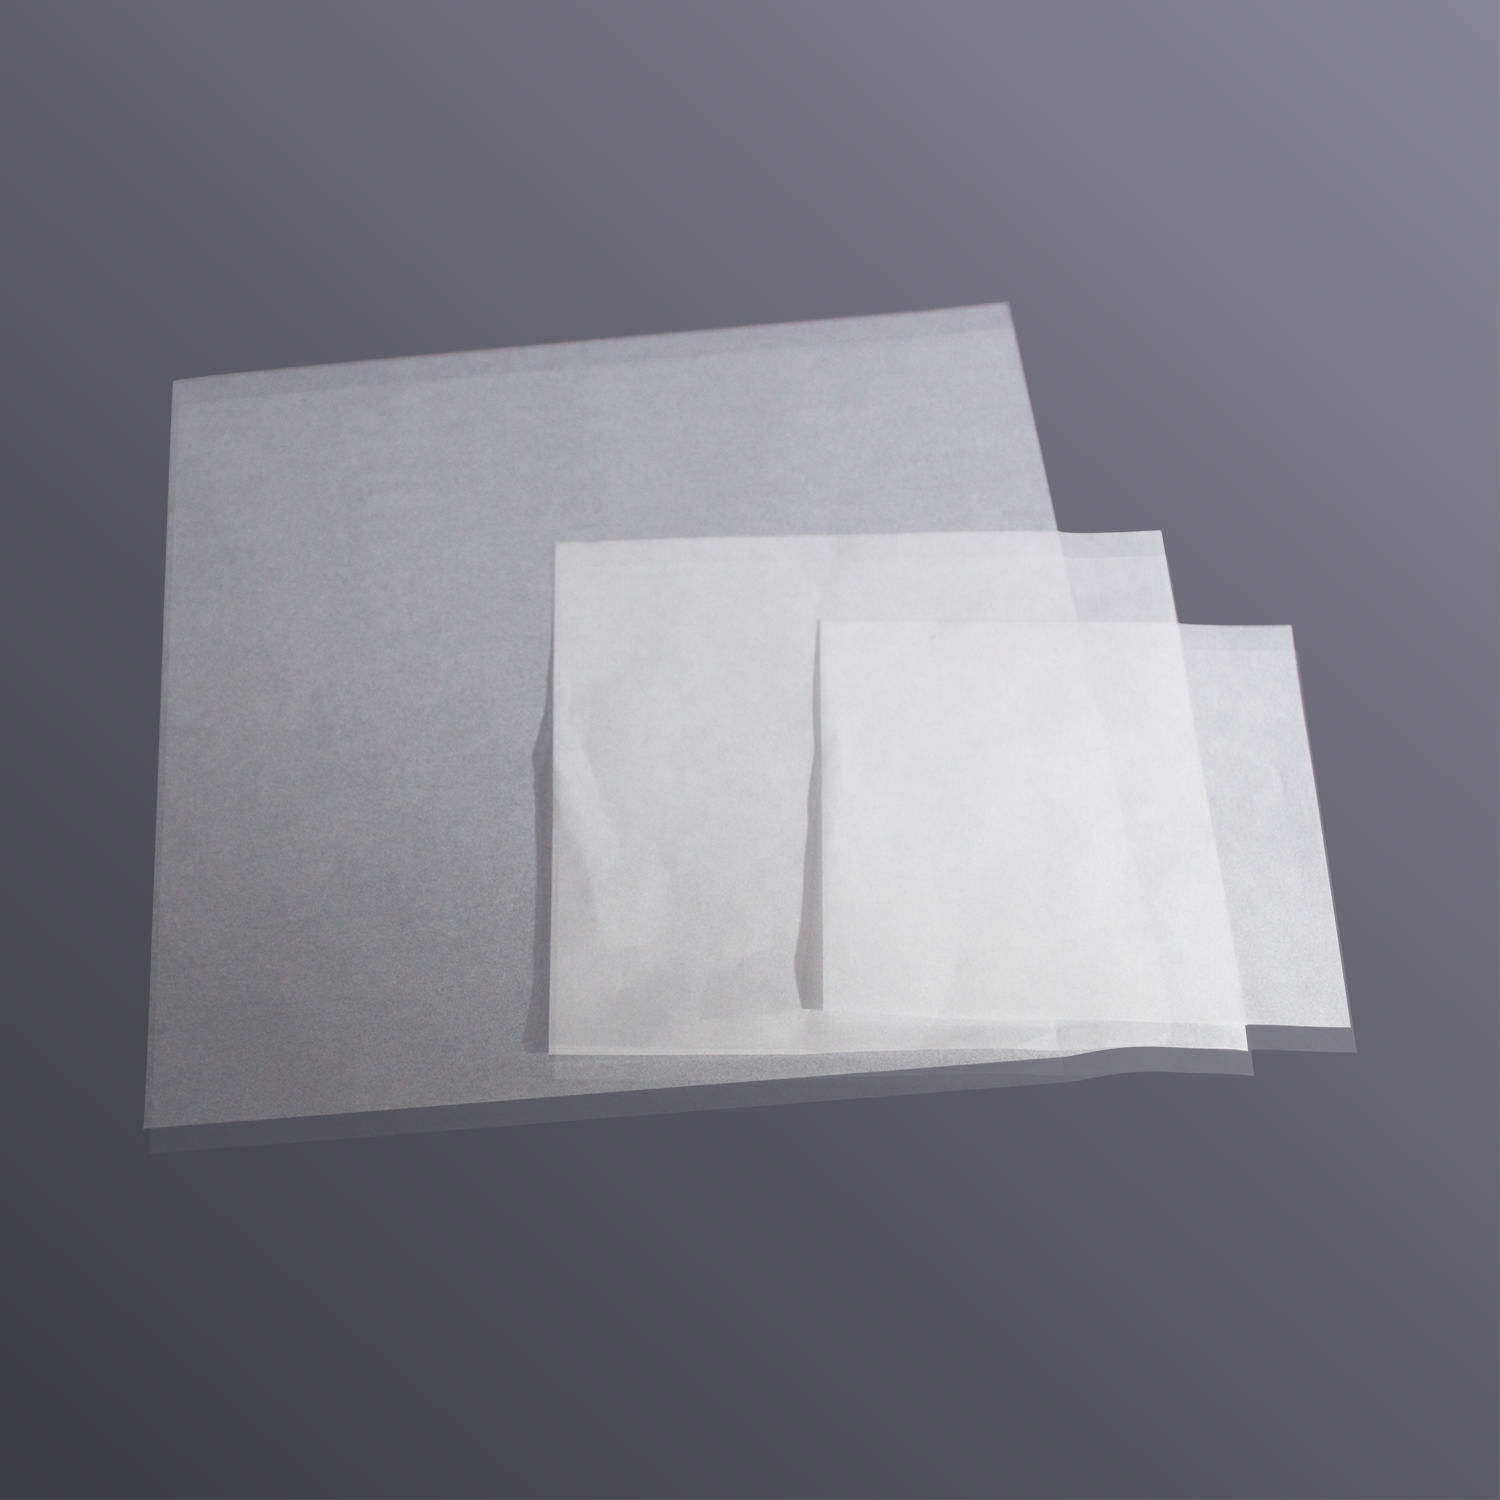 称量纸(150x150mm)